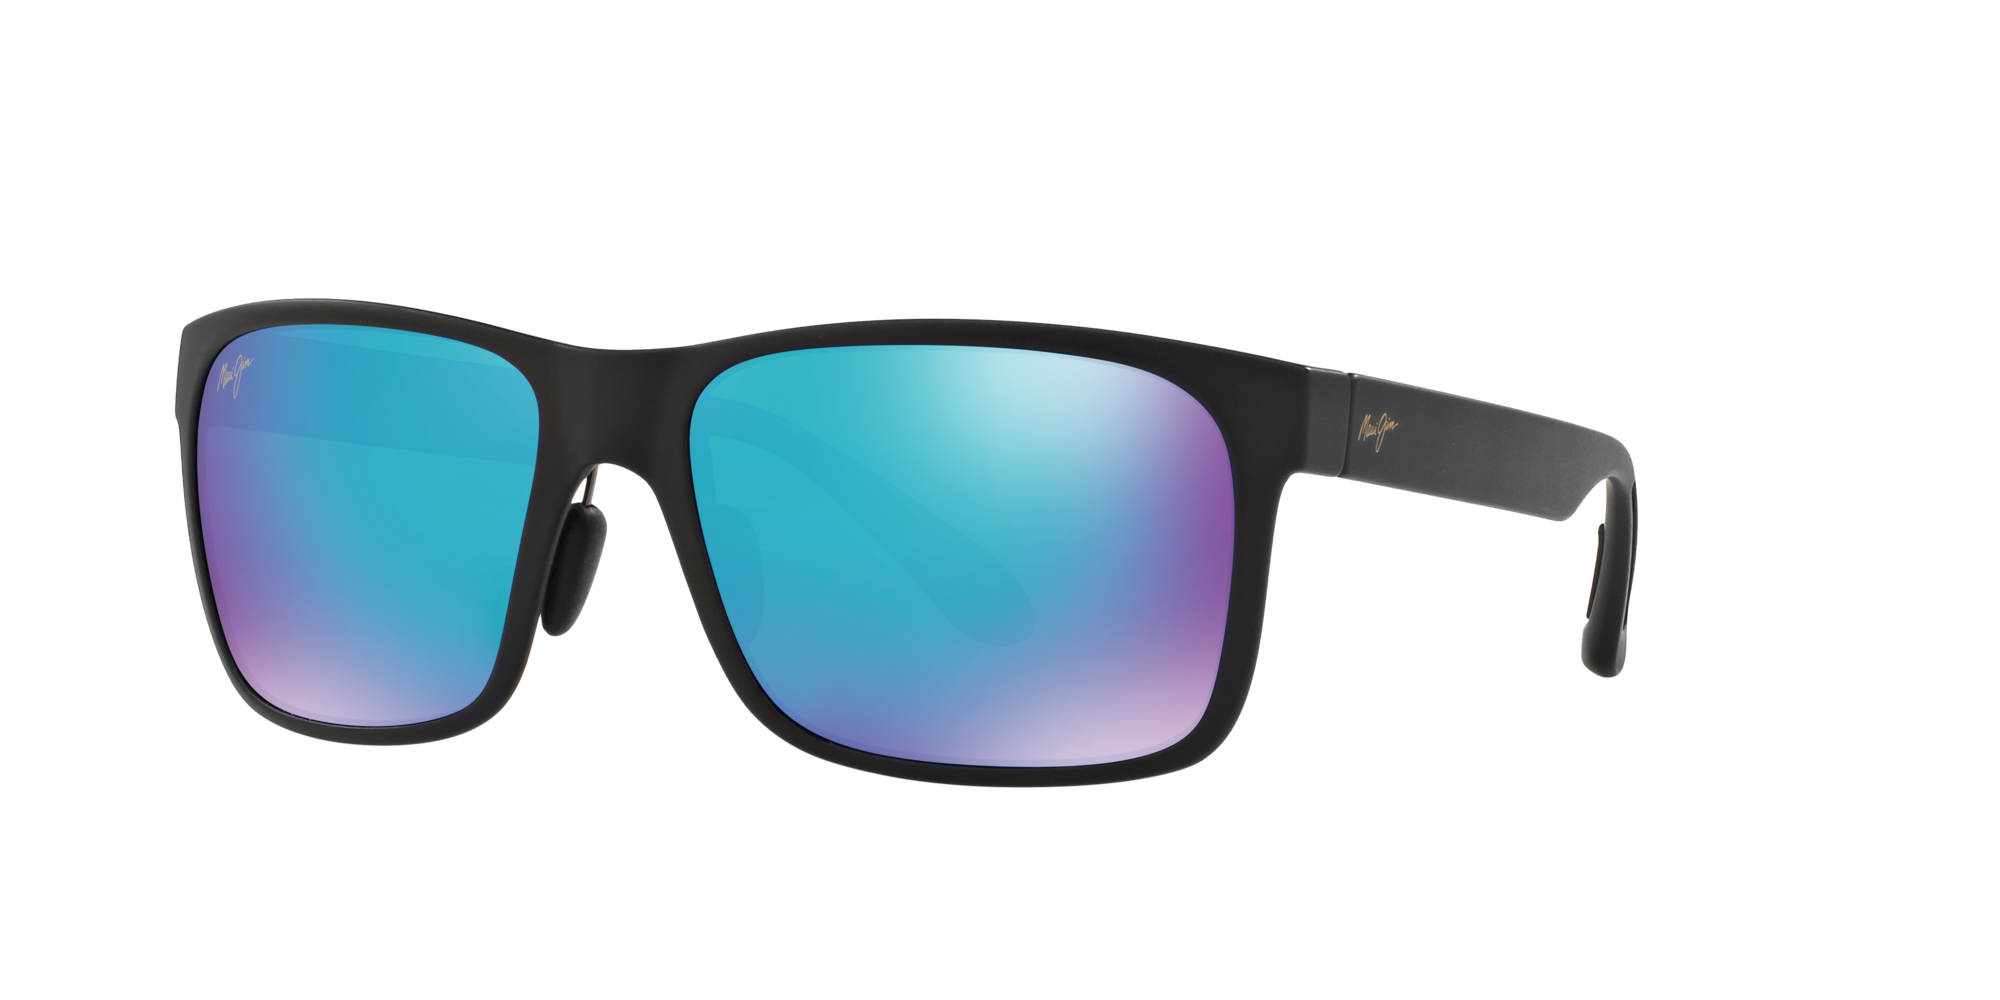 Maui Jim sunglass replacement lenses by Sunglass Fix™